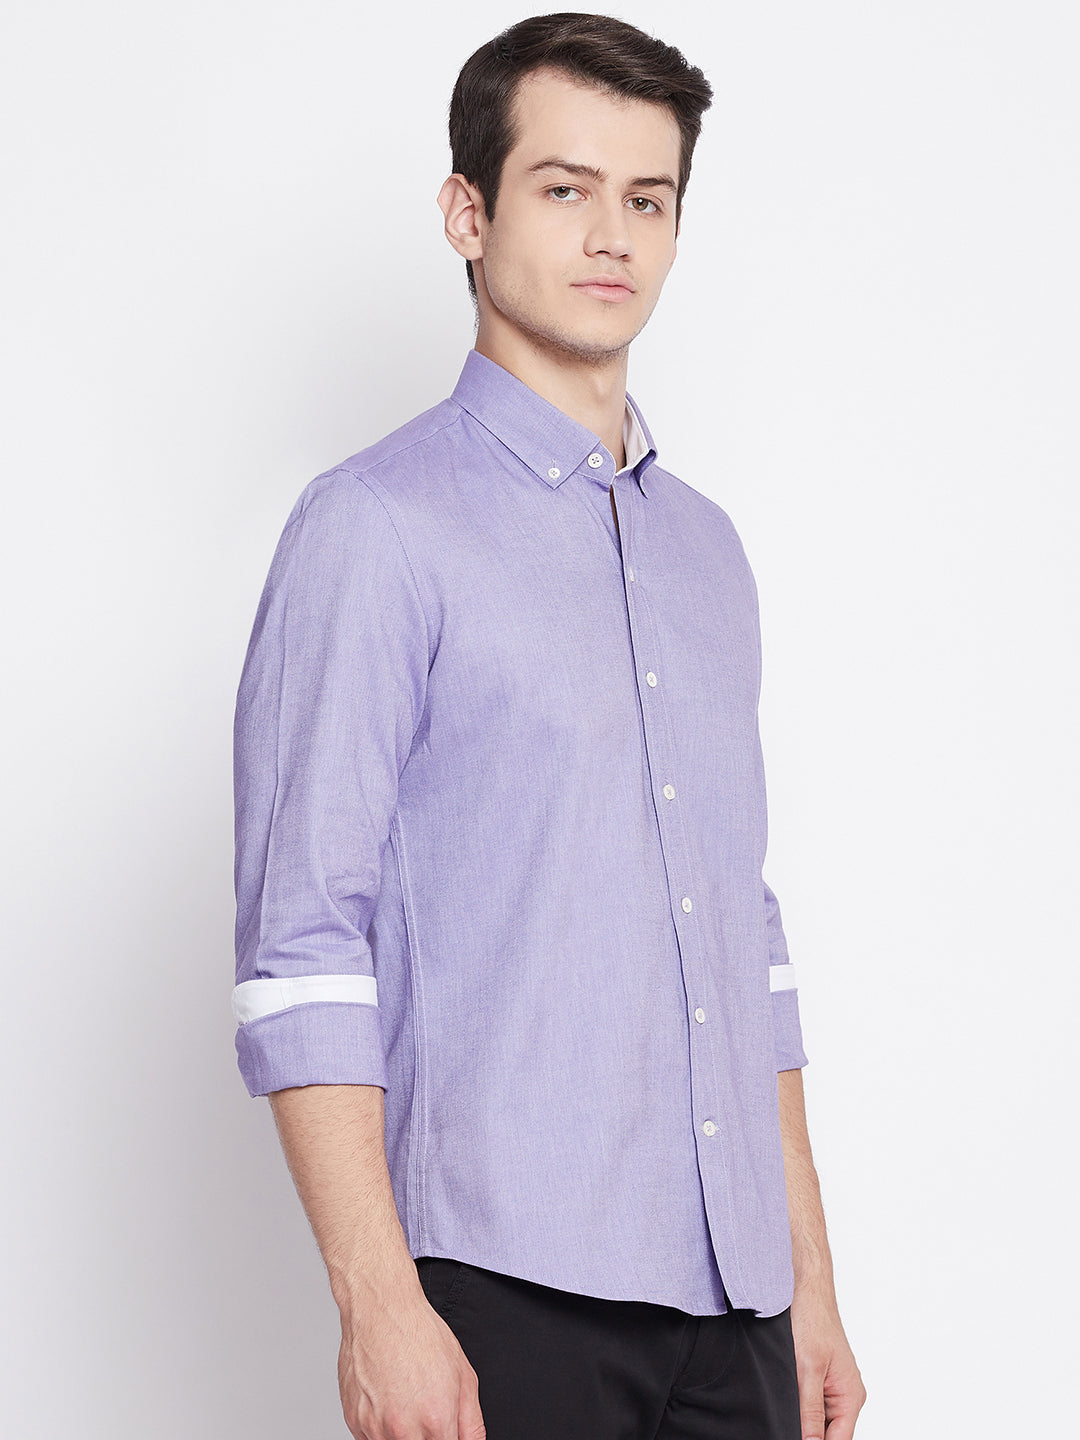 Medium Purple Oxford Cotton Shirt